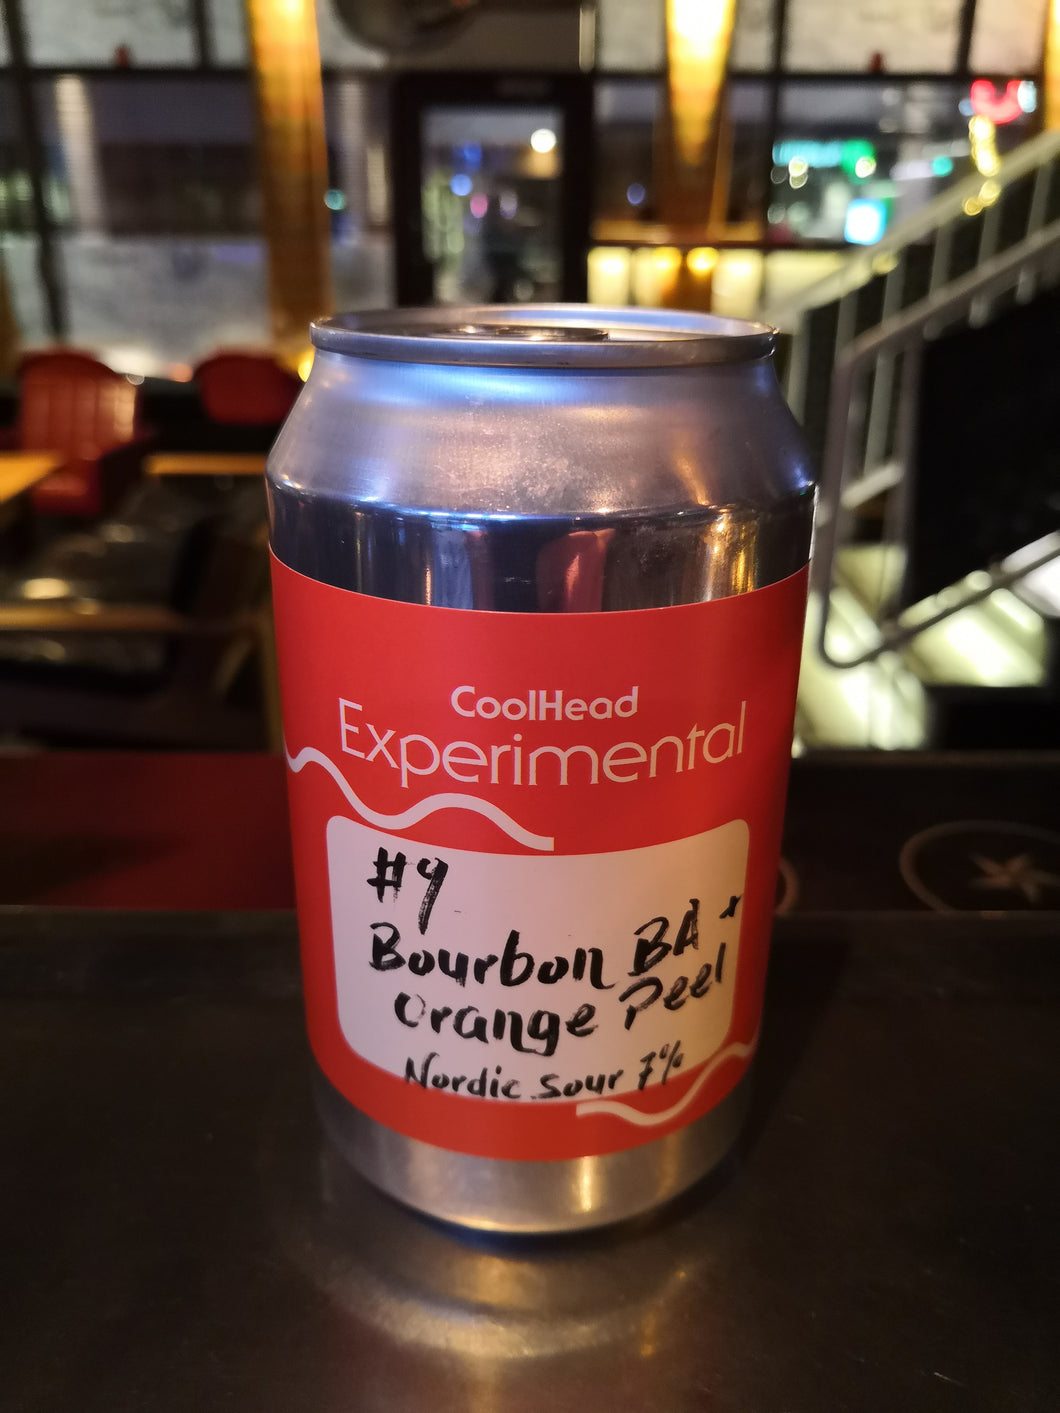 CoolHead Experimental #9 Bourbon BA + Orange Peel Nordic Sour